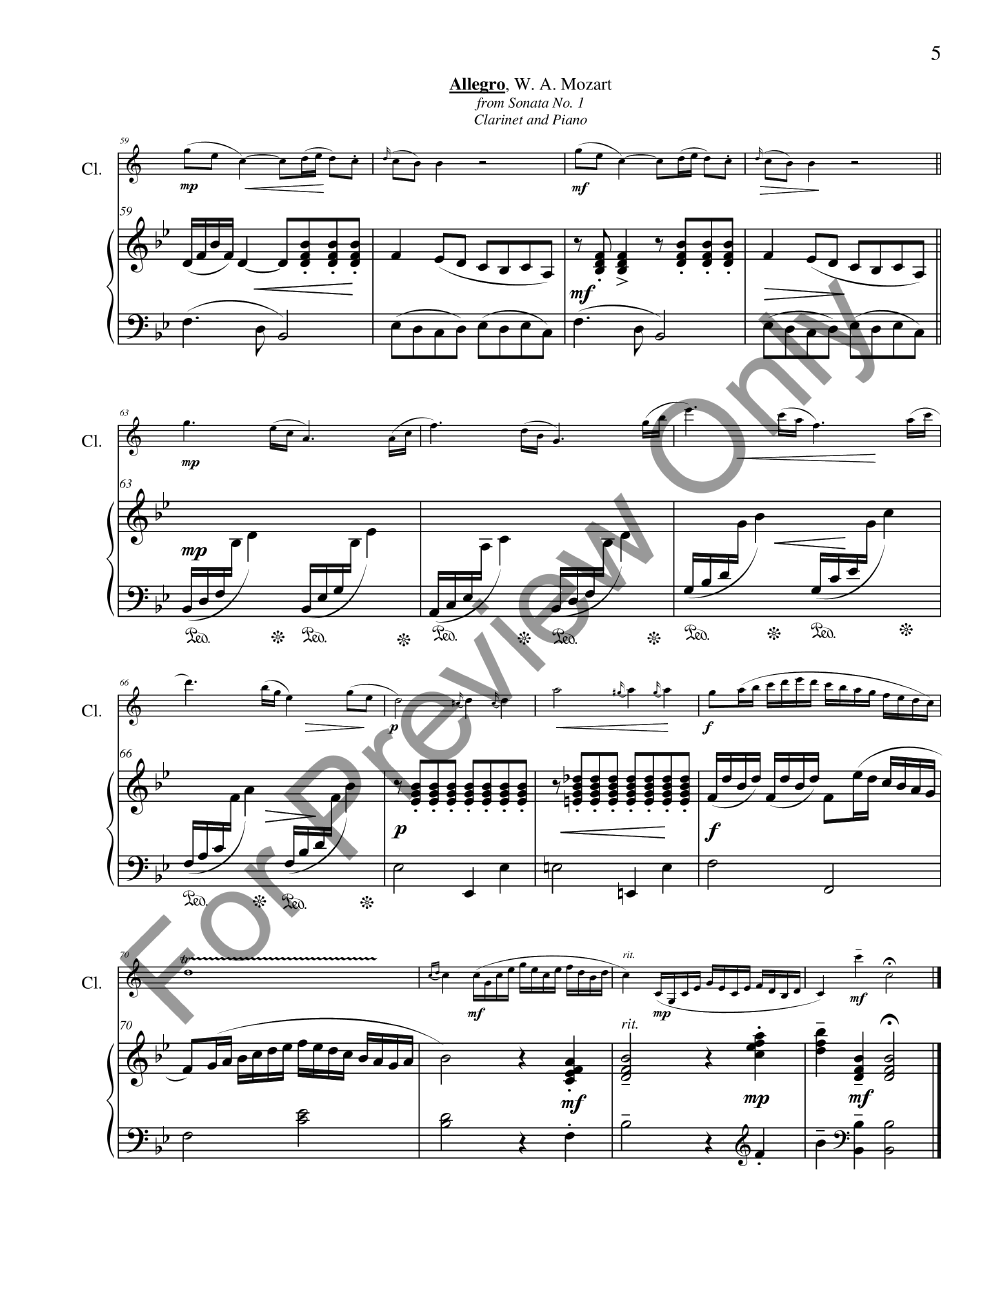 Allegro from Sonata #1 Clarinet and Piano - P.O.D.